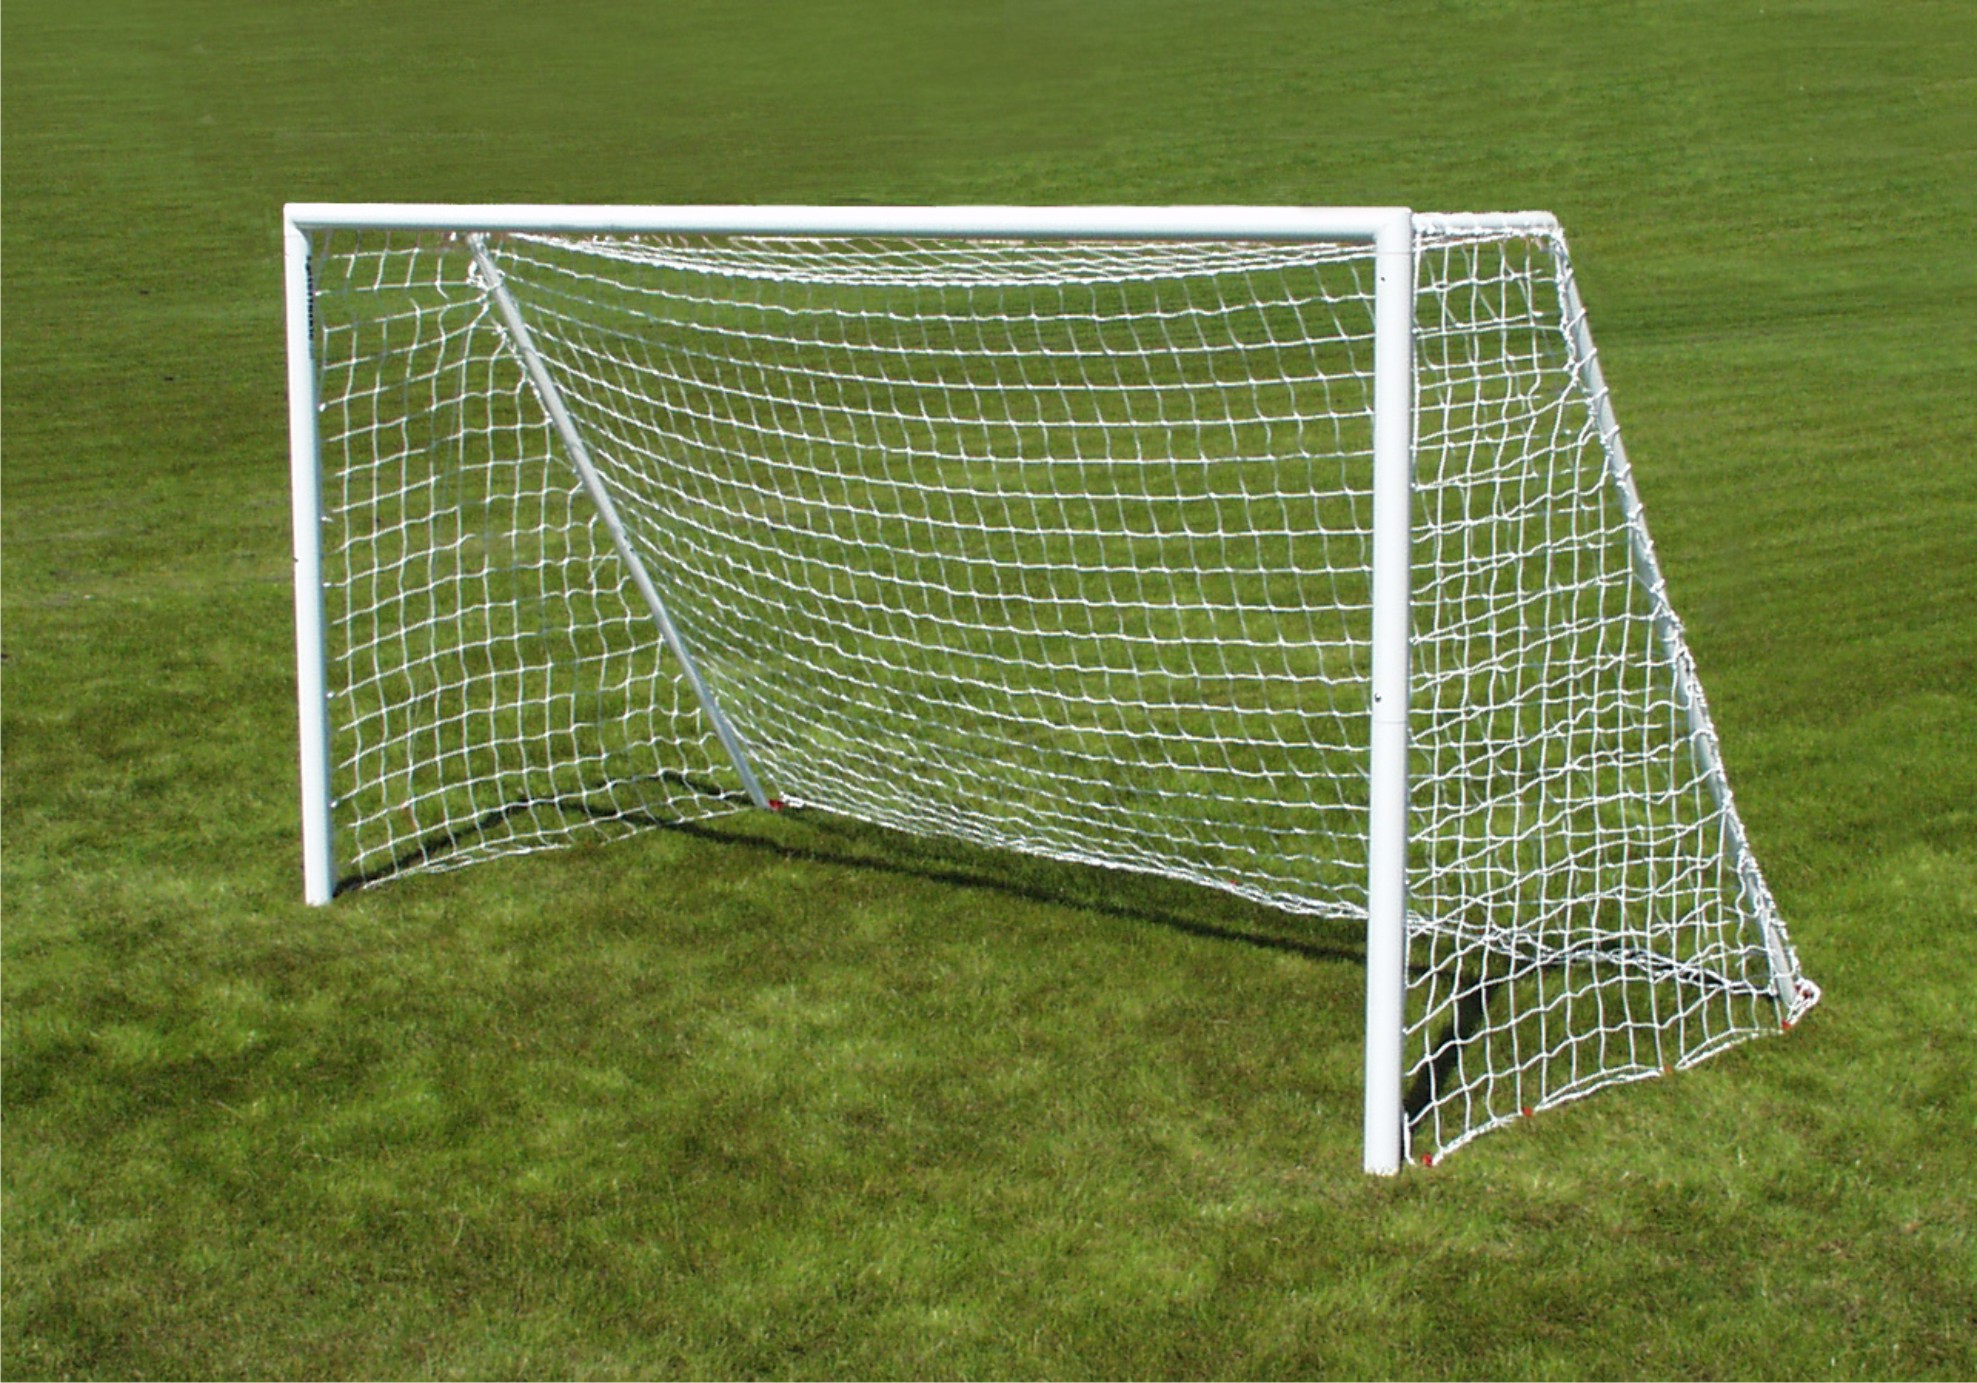 Soccer Goal Post Fixed